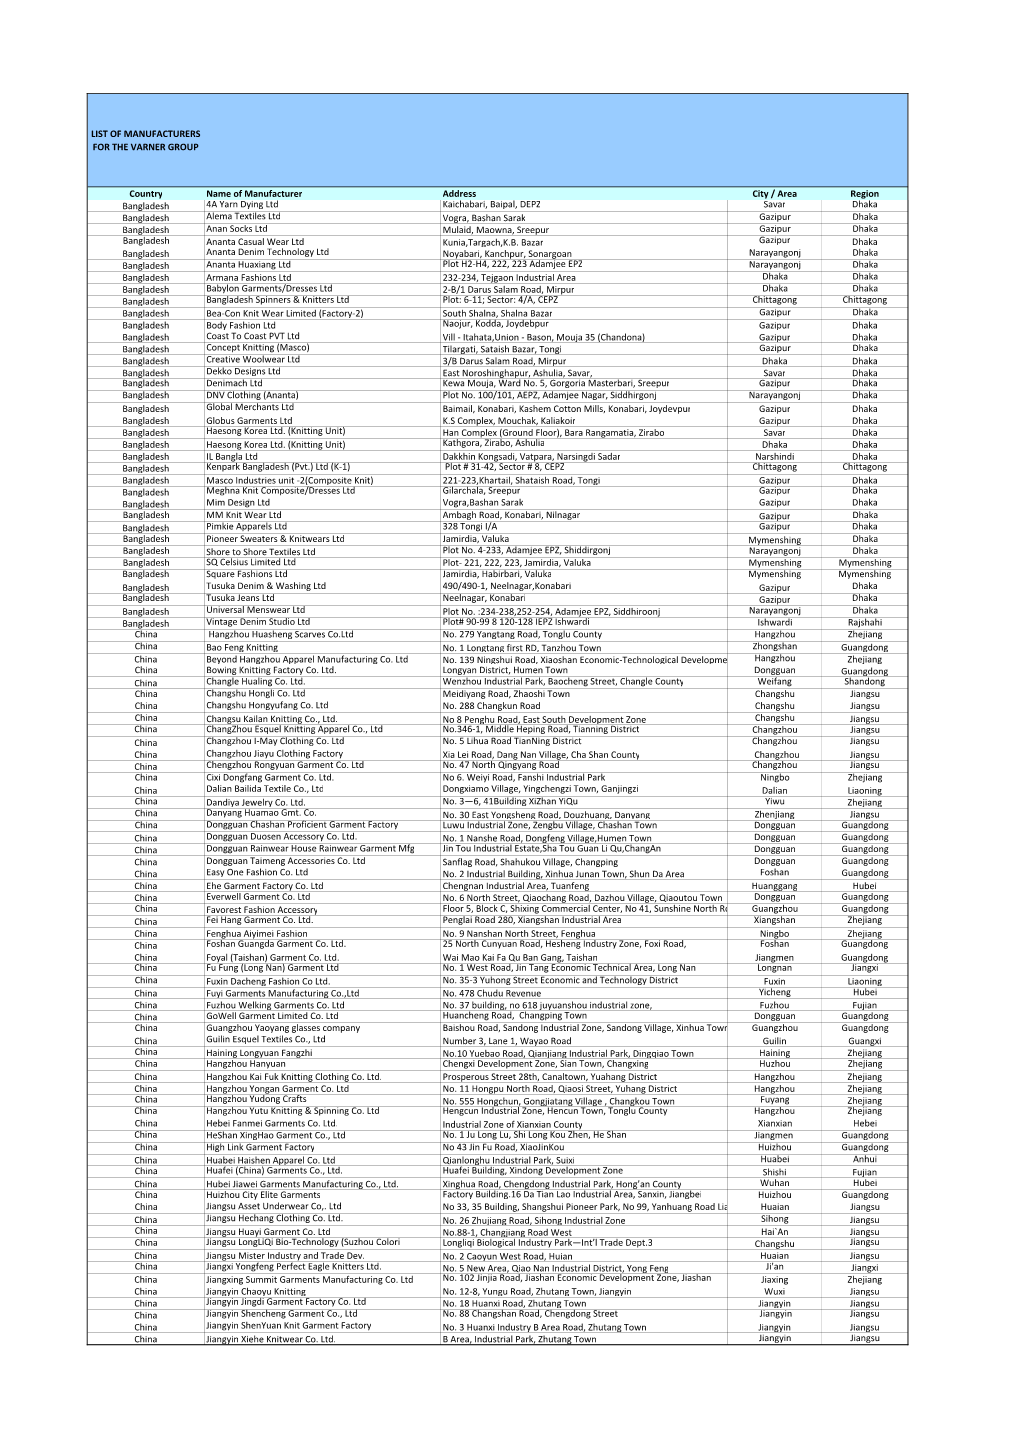 Public Factory List Combined Nov 2015